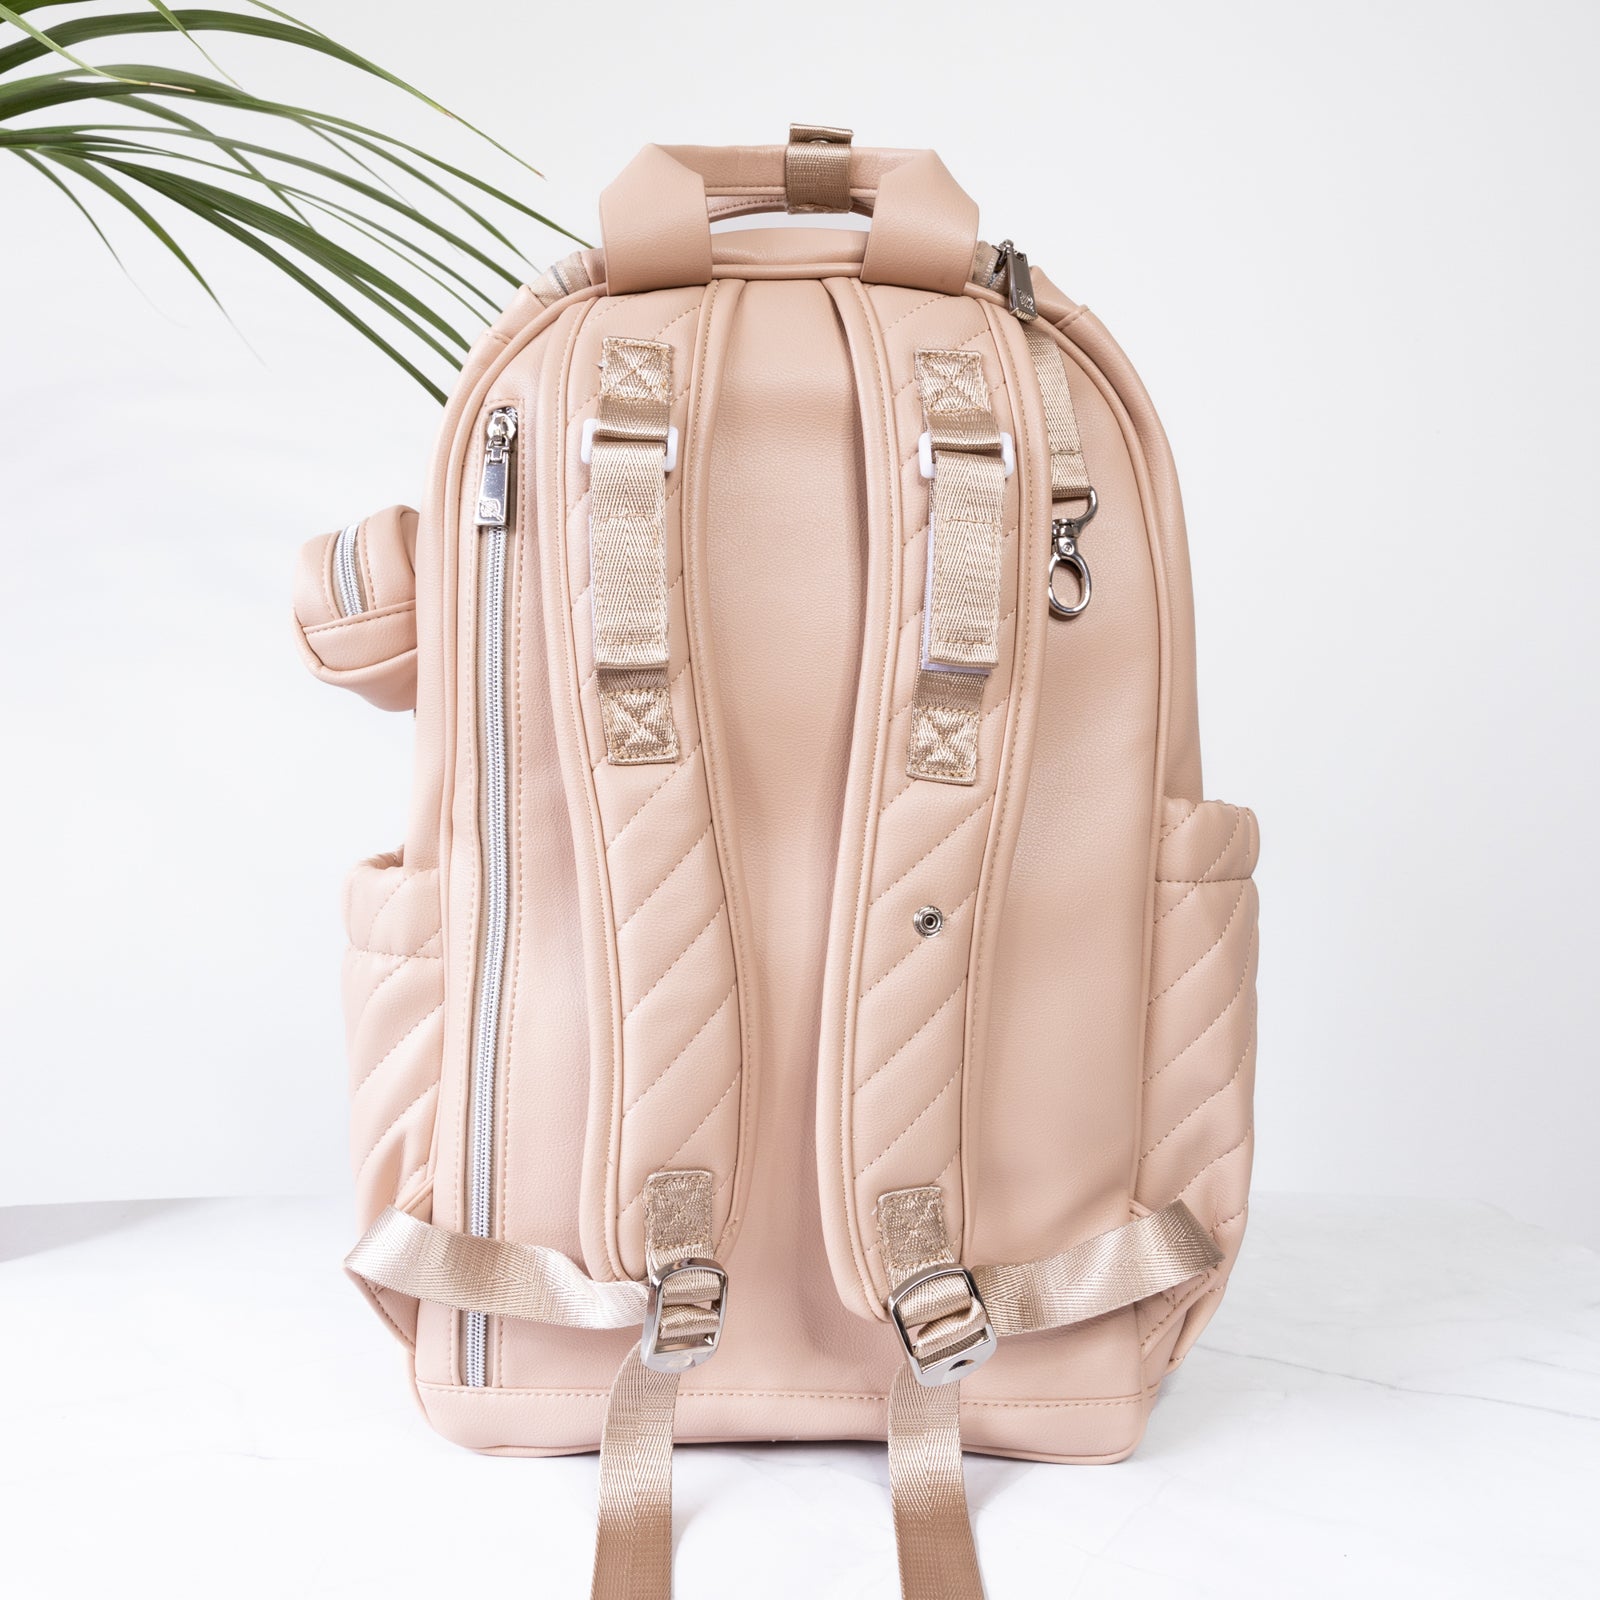 Rosewood Ultimate Backpack